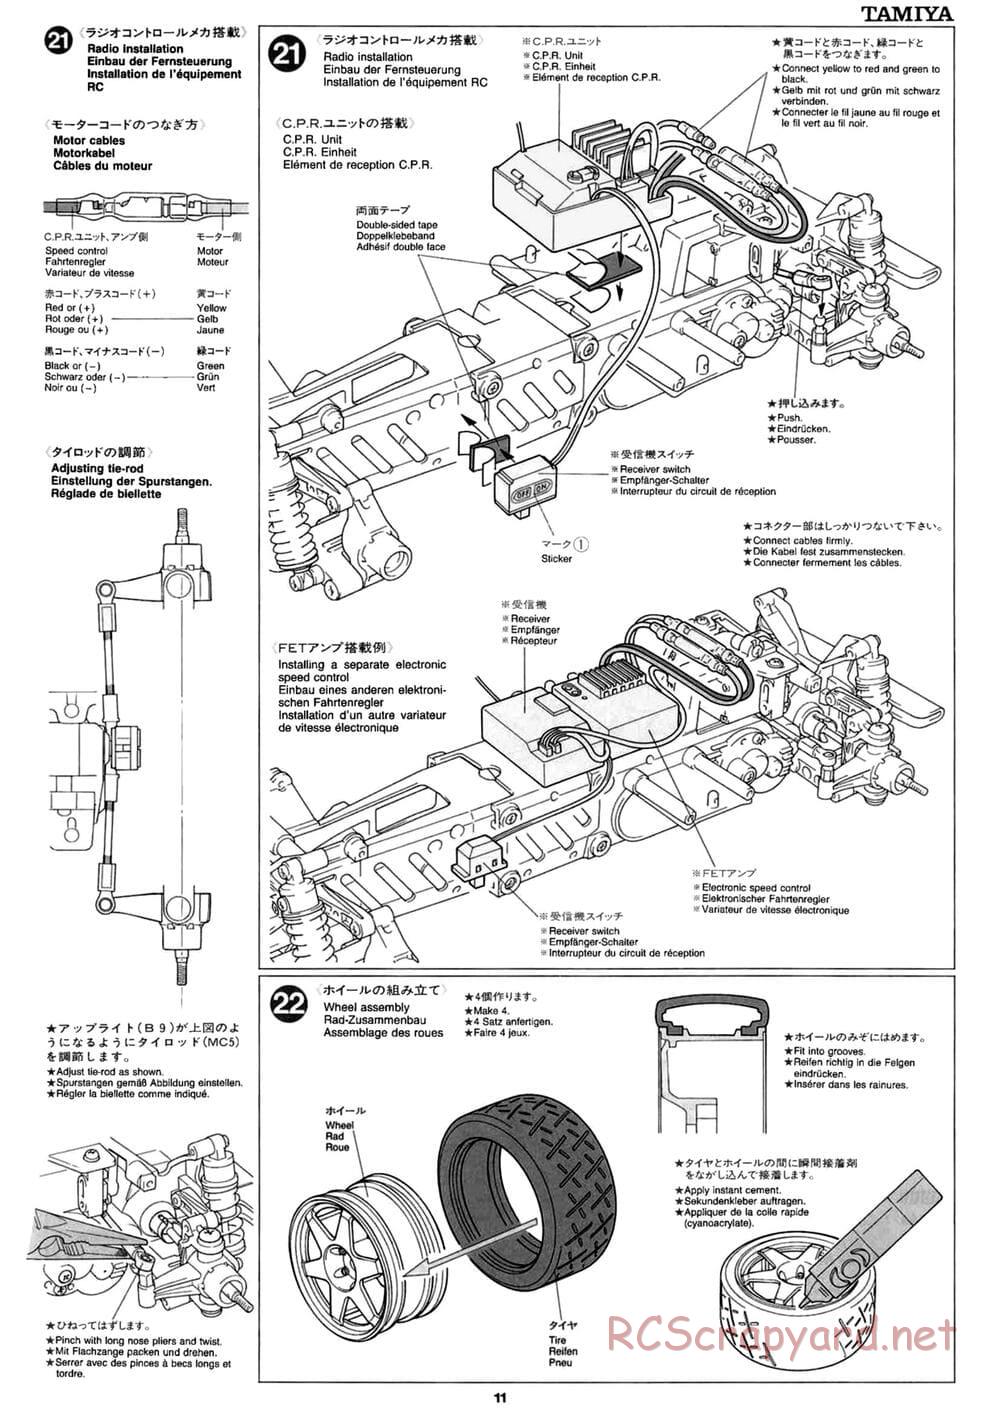 Tamiya - Peugeot 306 Maxi WRC - FF-02 Chassis - Manual - Page 11